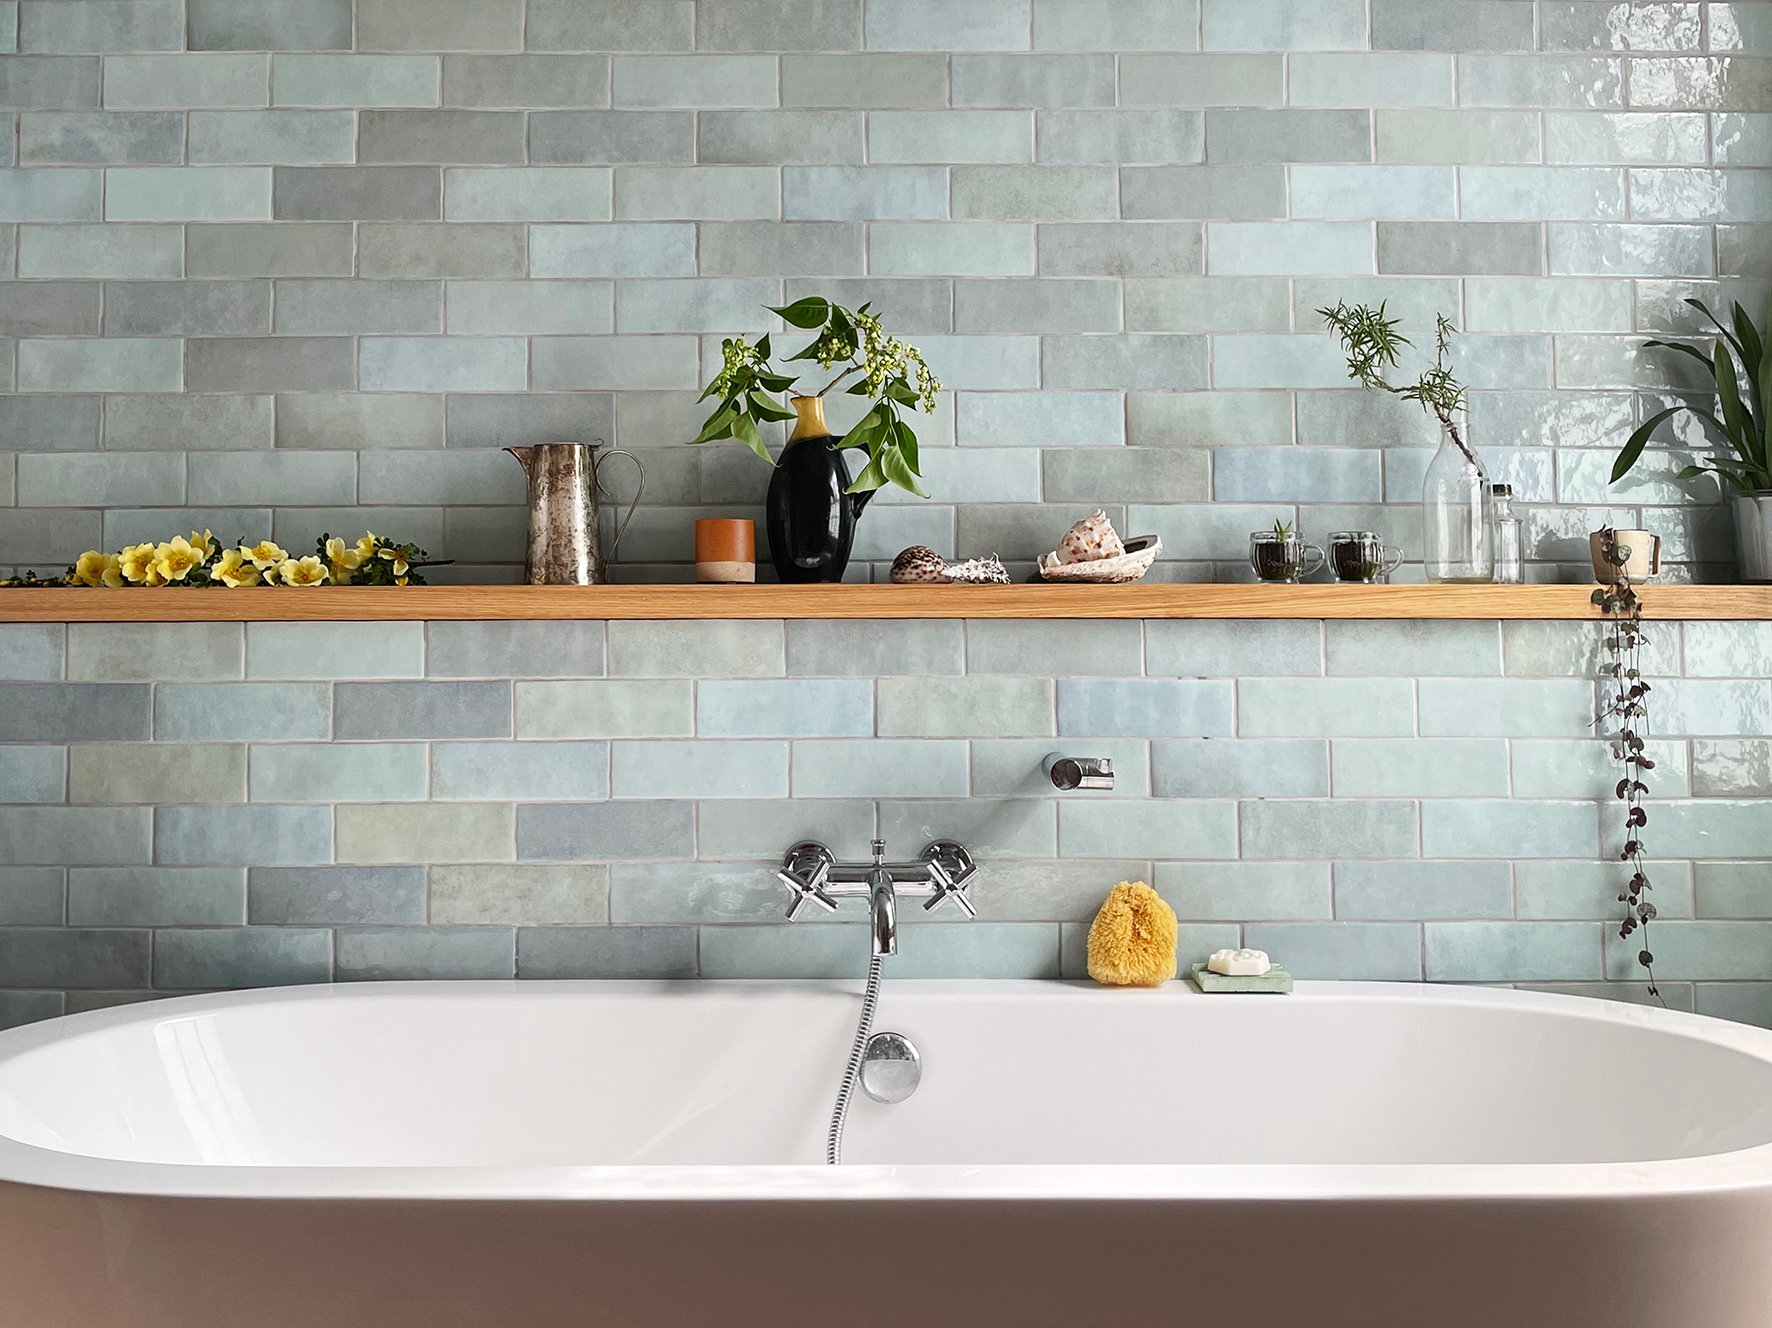 CharlotteBucciero-Interiors-Bathroom-oak-shelf-bathtub-blue-tiles-splashback.jpg